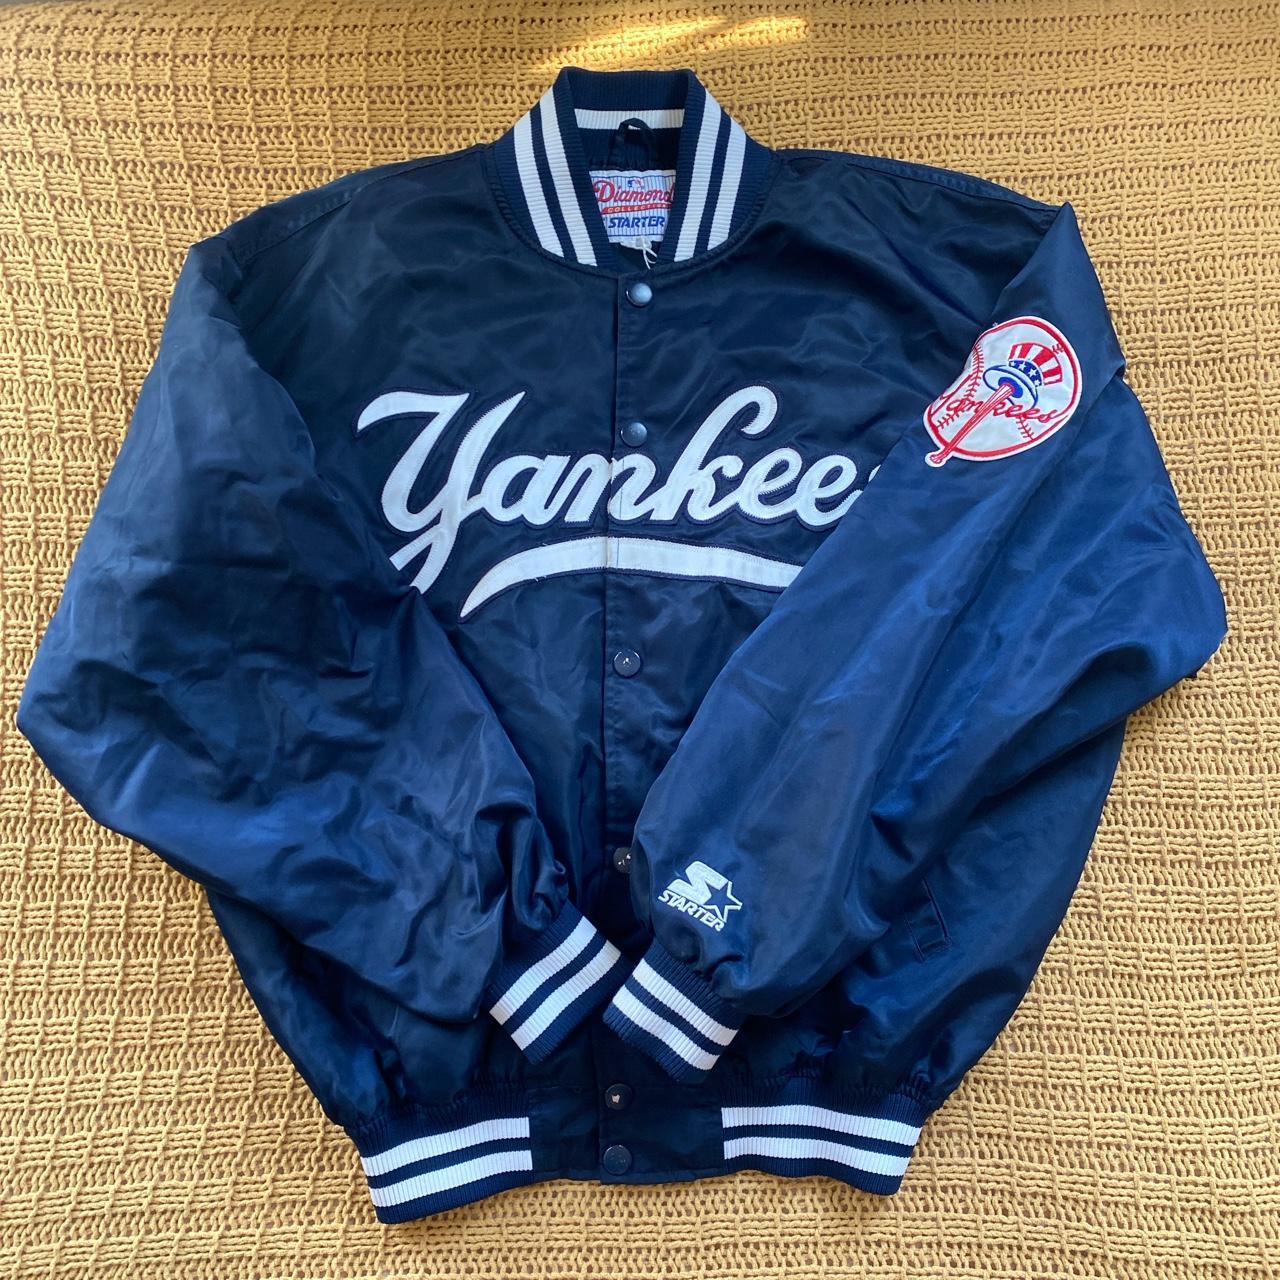 vintage NY Yankees diamond collection starter - Depop